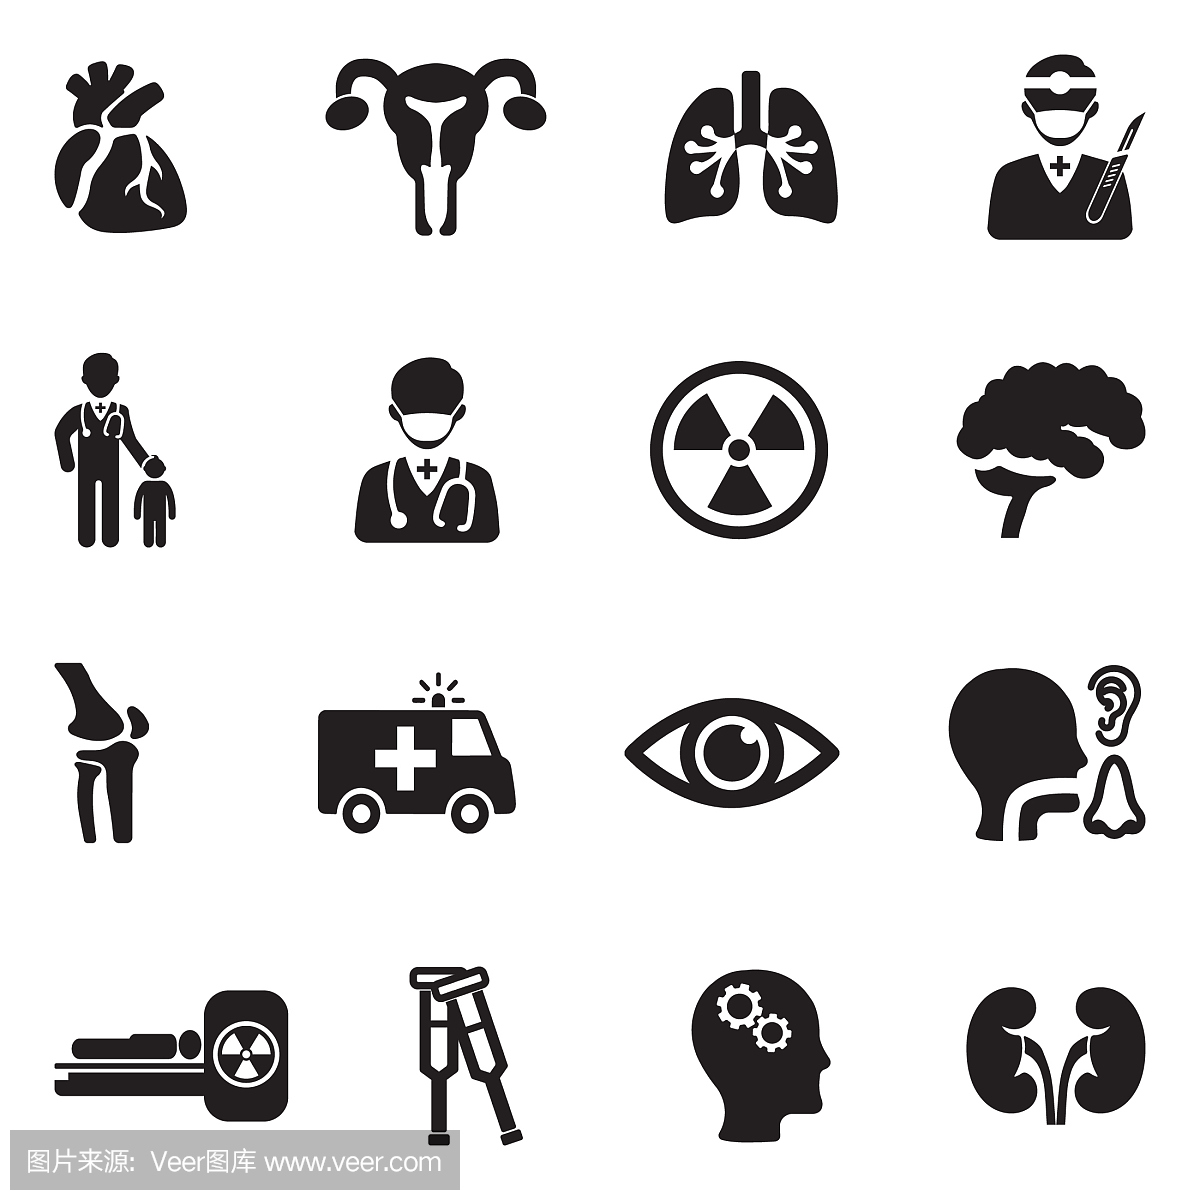 Hospital Departments Icons. Black Flat Design